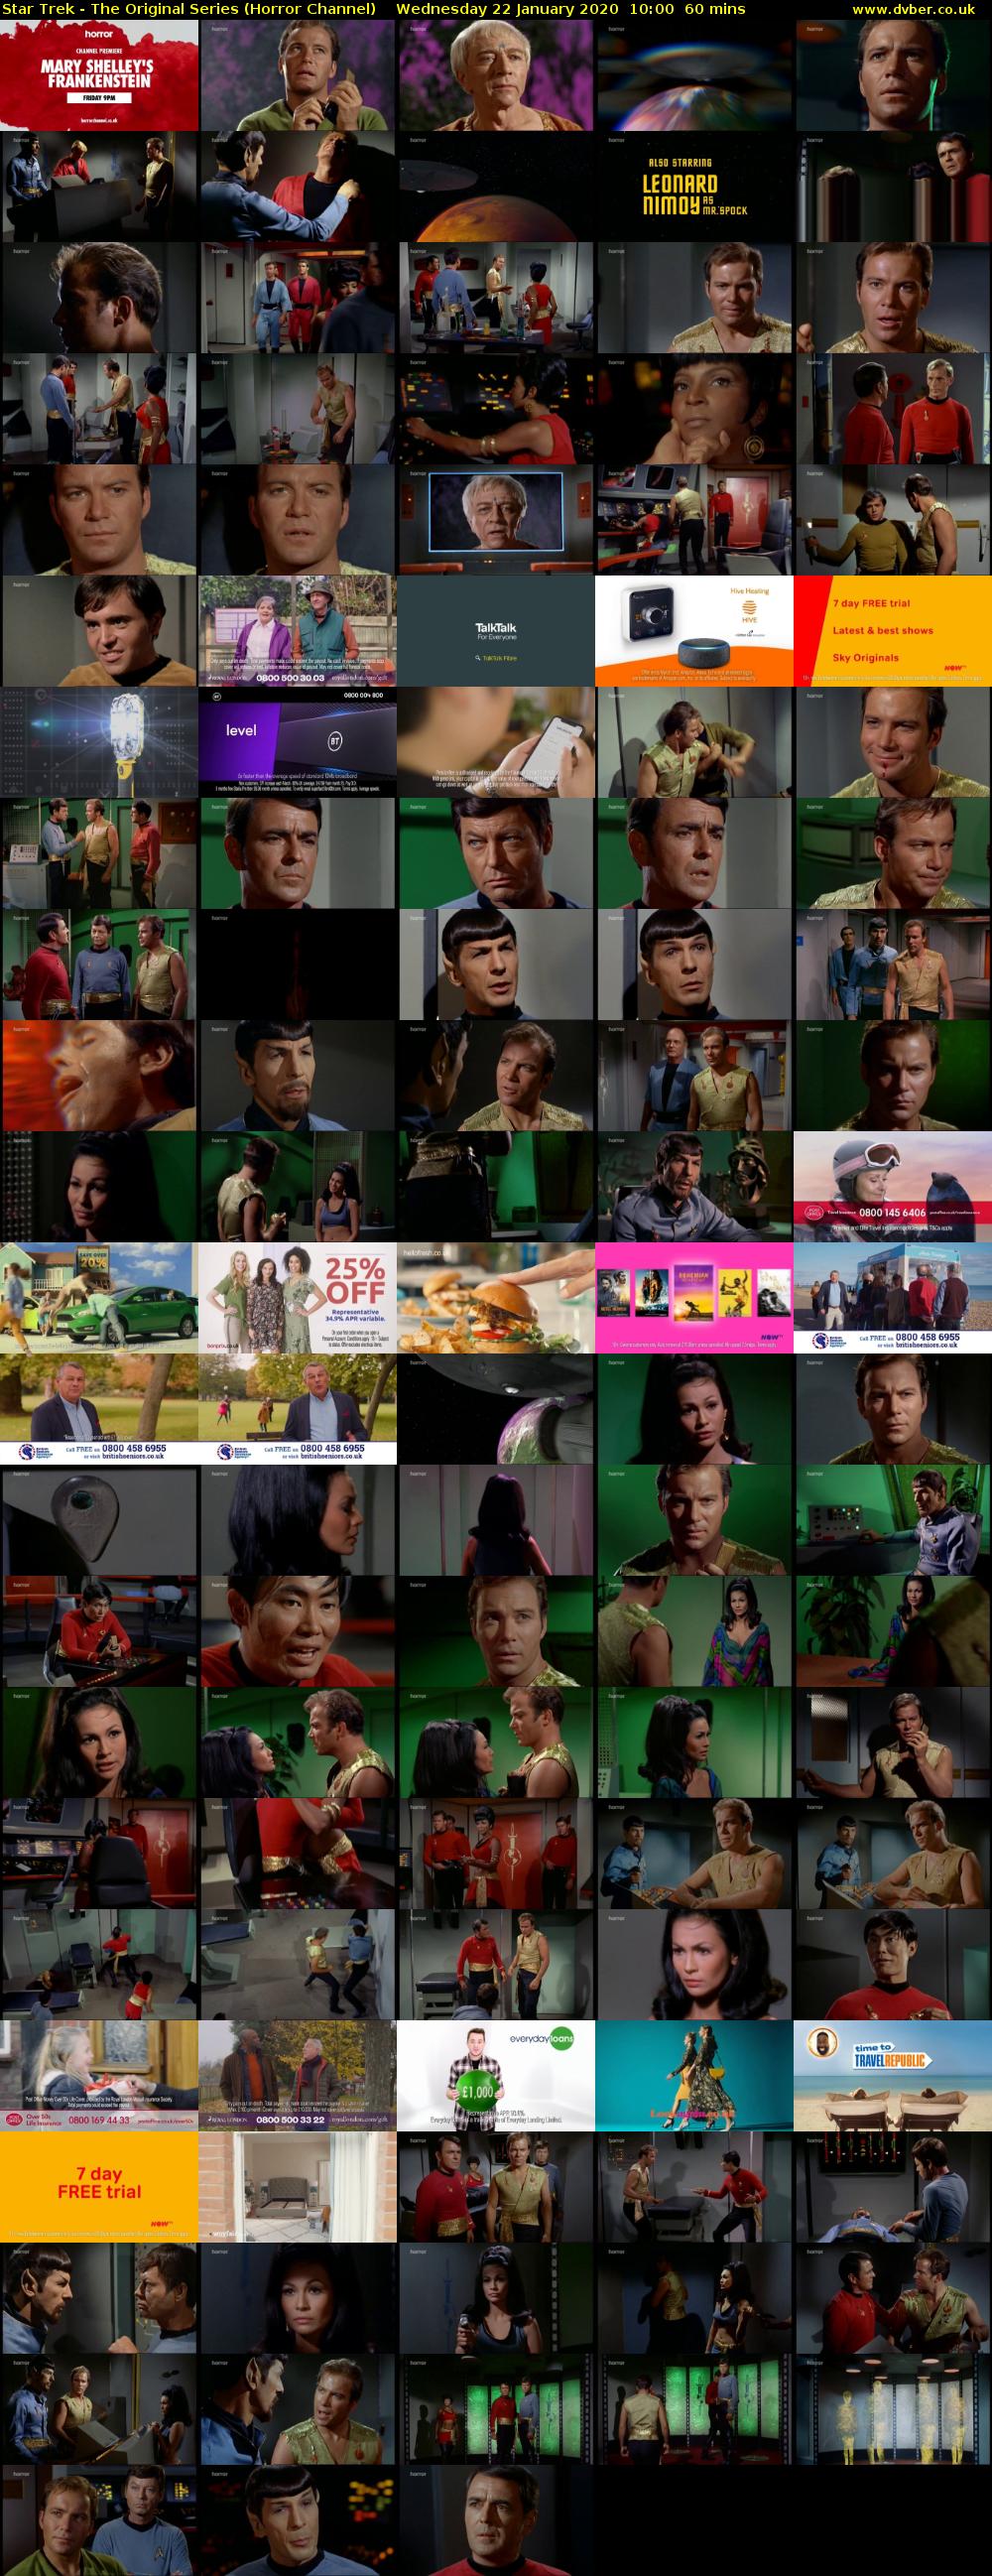 Star Trek - The Original Series (Horror Channel) Wednesday 22 January 2020 10:00 - 11:00